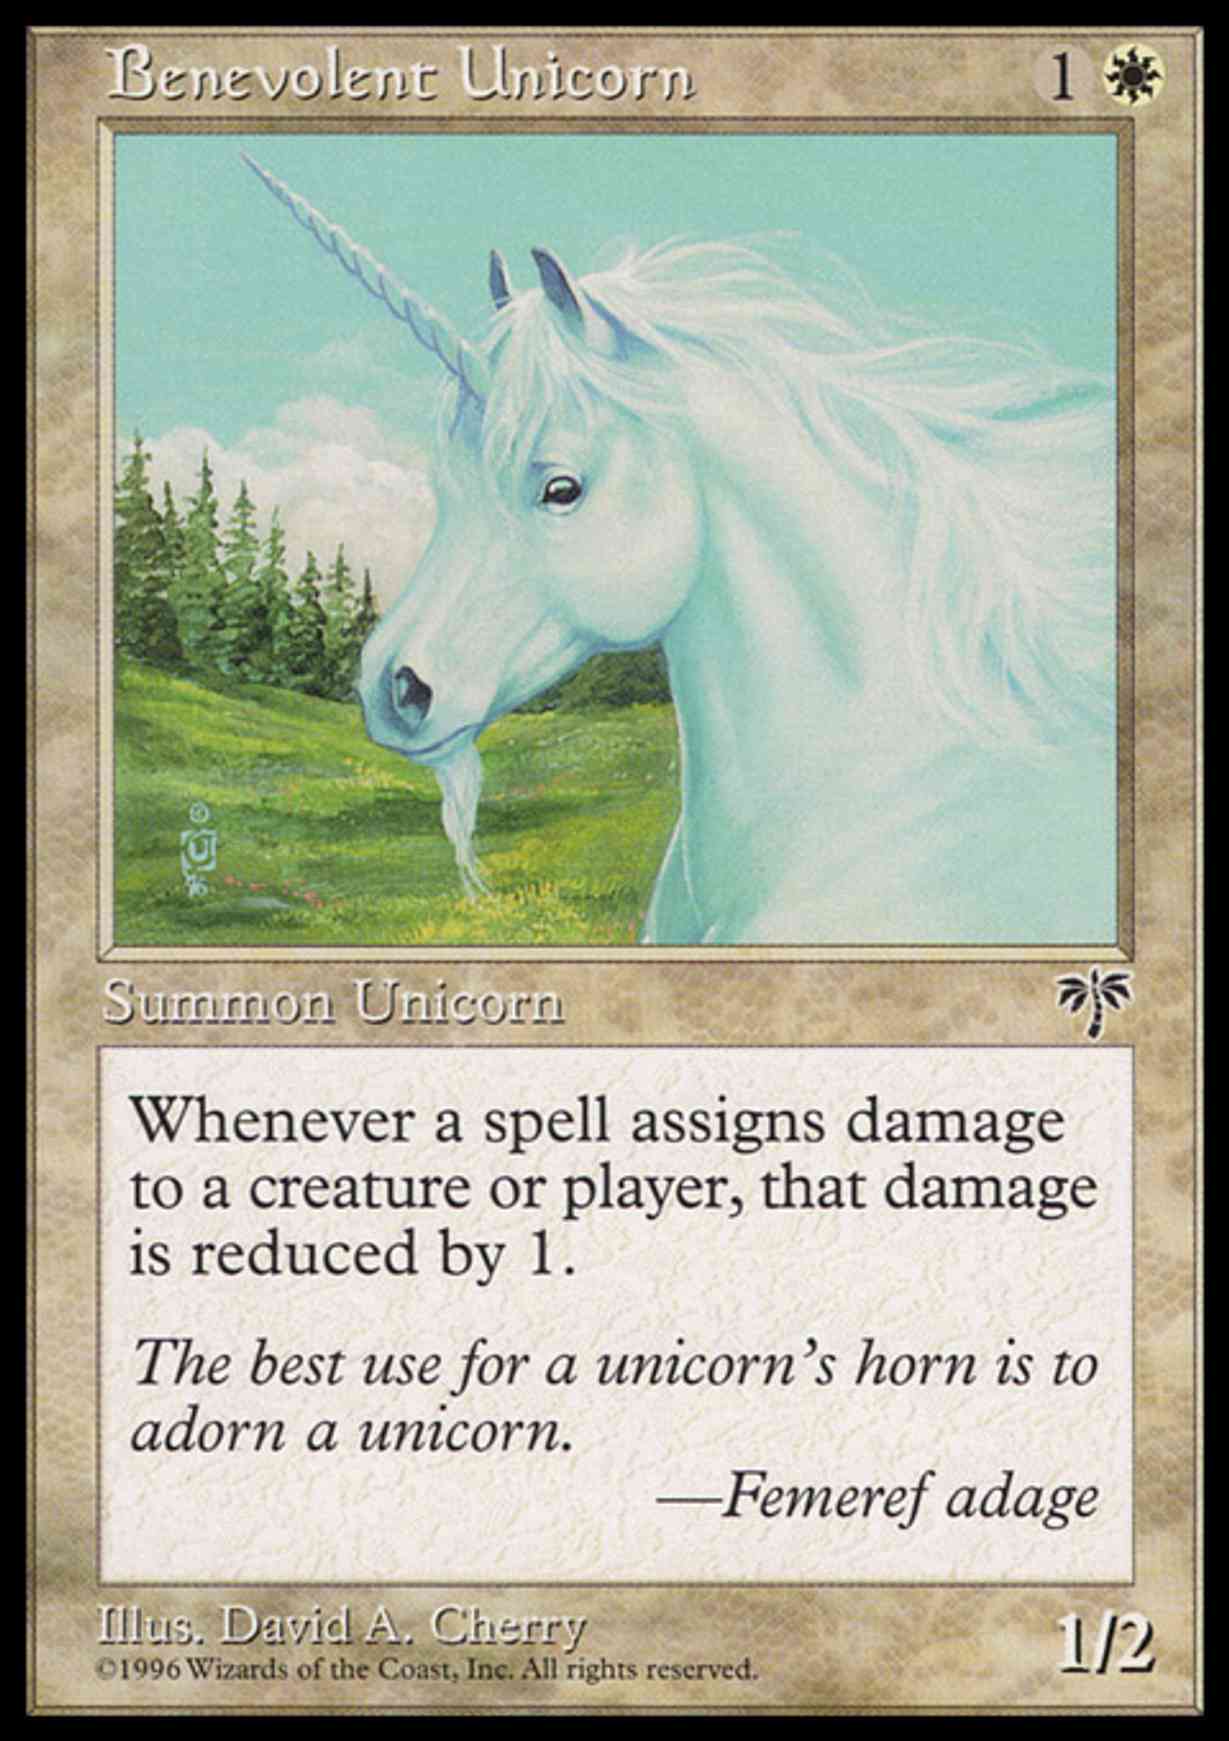 Benevolent Unicorn magic card front